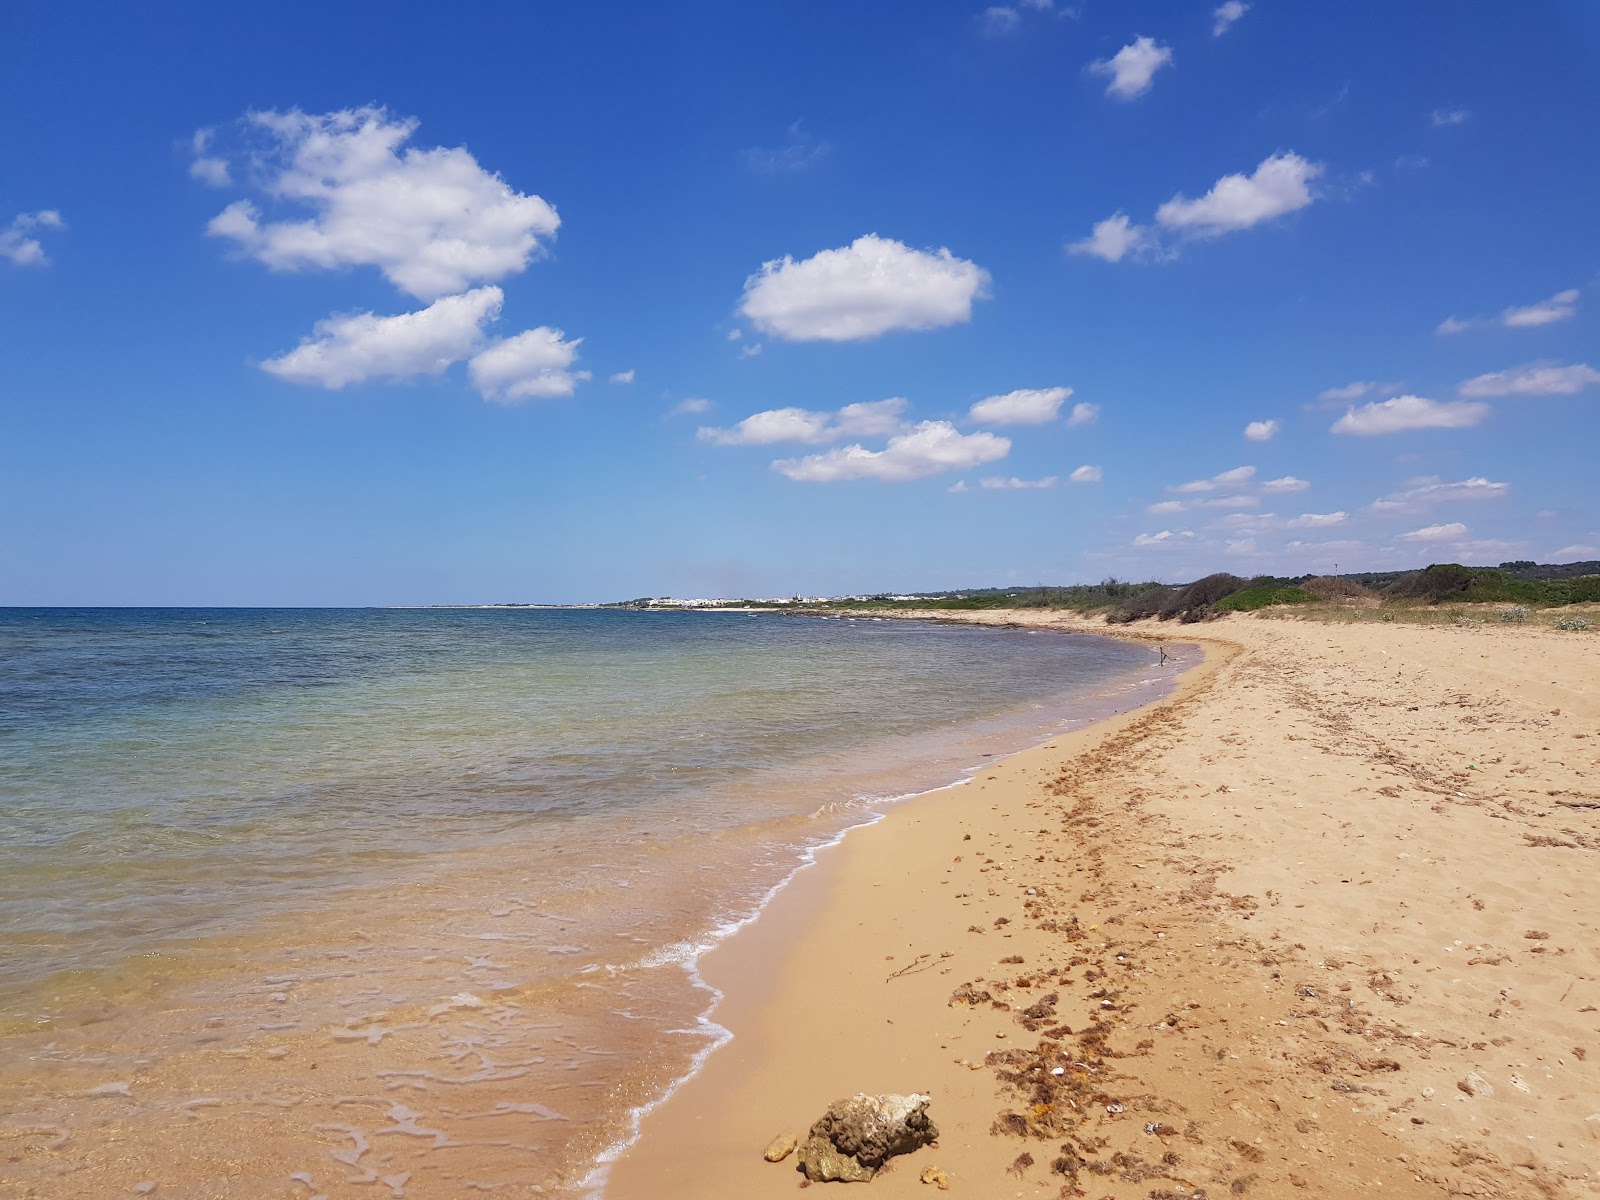 Foto de Spiaggia dell'Isola della Fanciulla com areia brilhante superfície